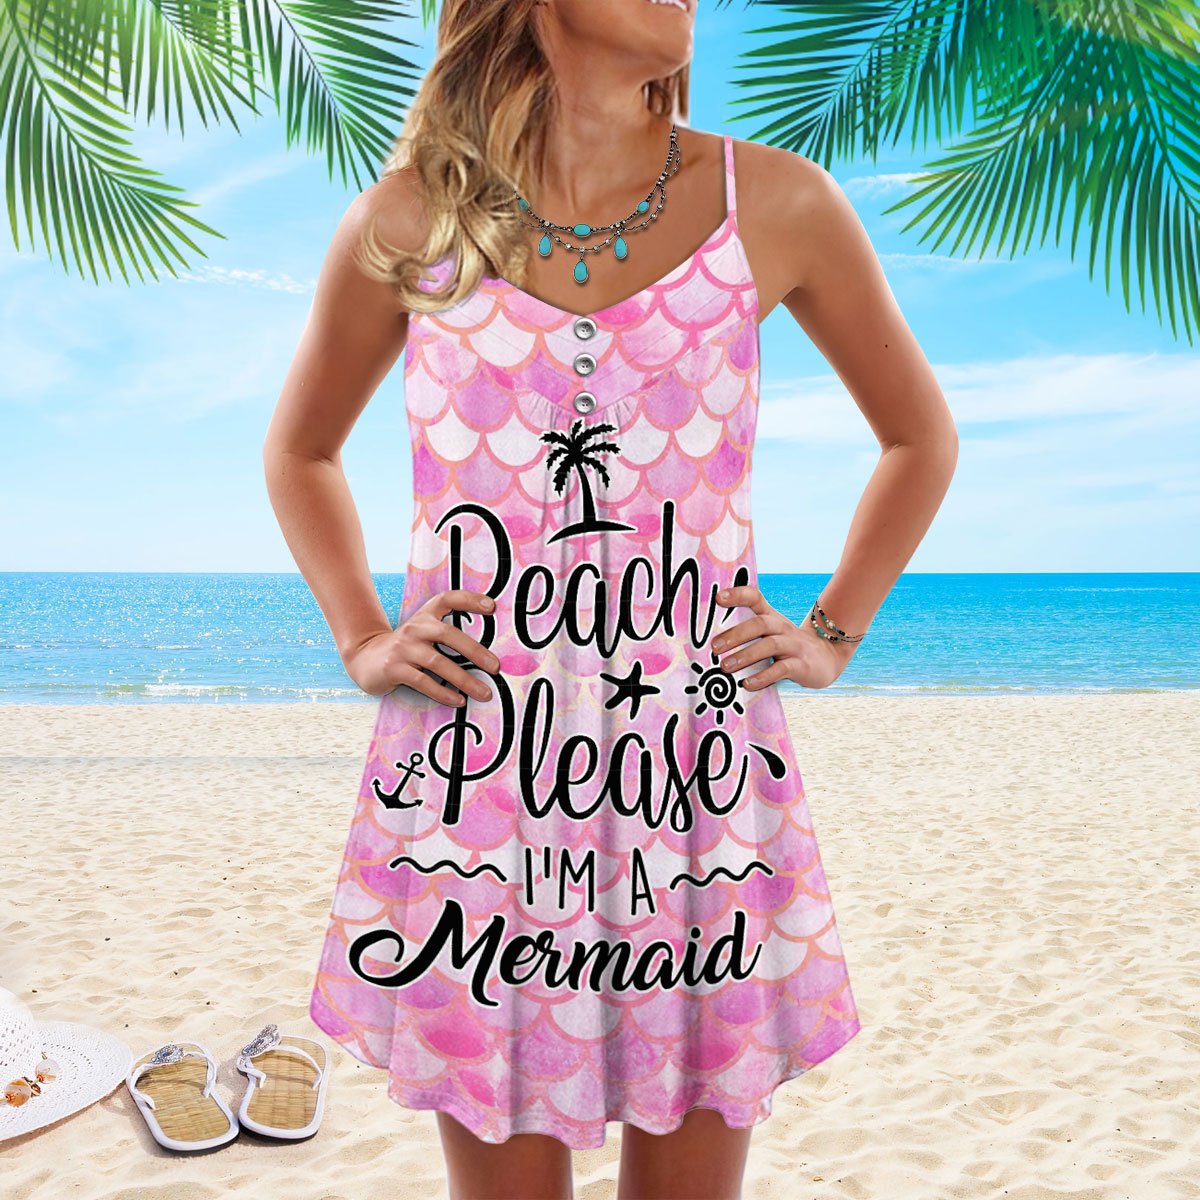 Mermaid Beach Please I'm A Mermaid - Summer Dress - Owls Matrix LTD